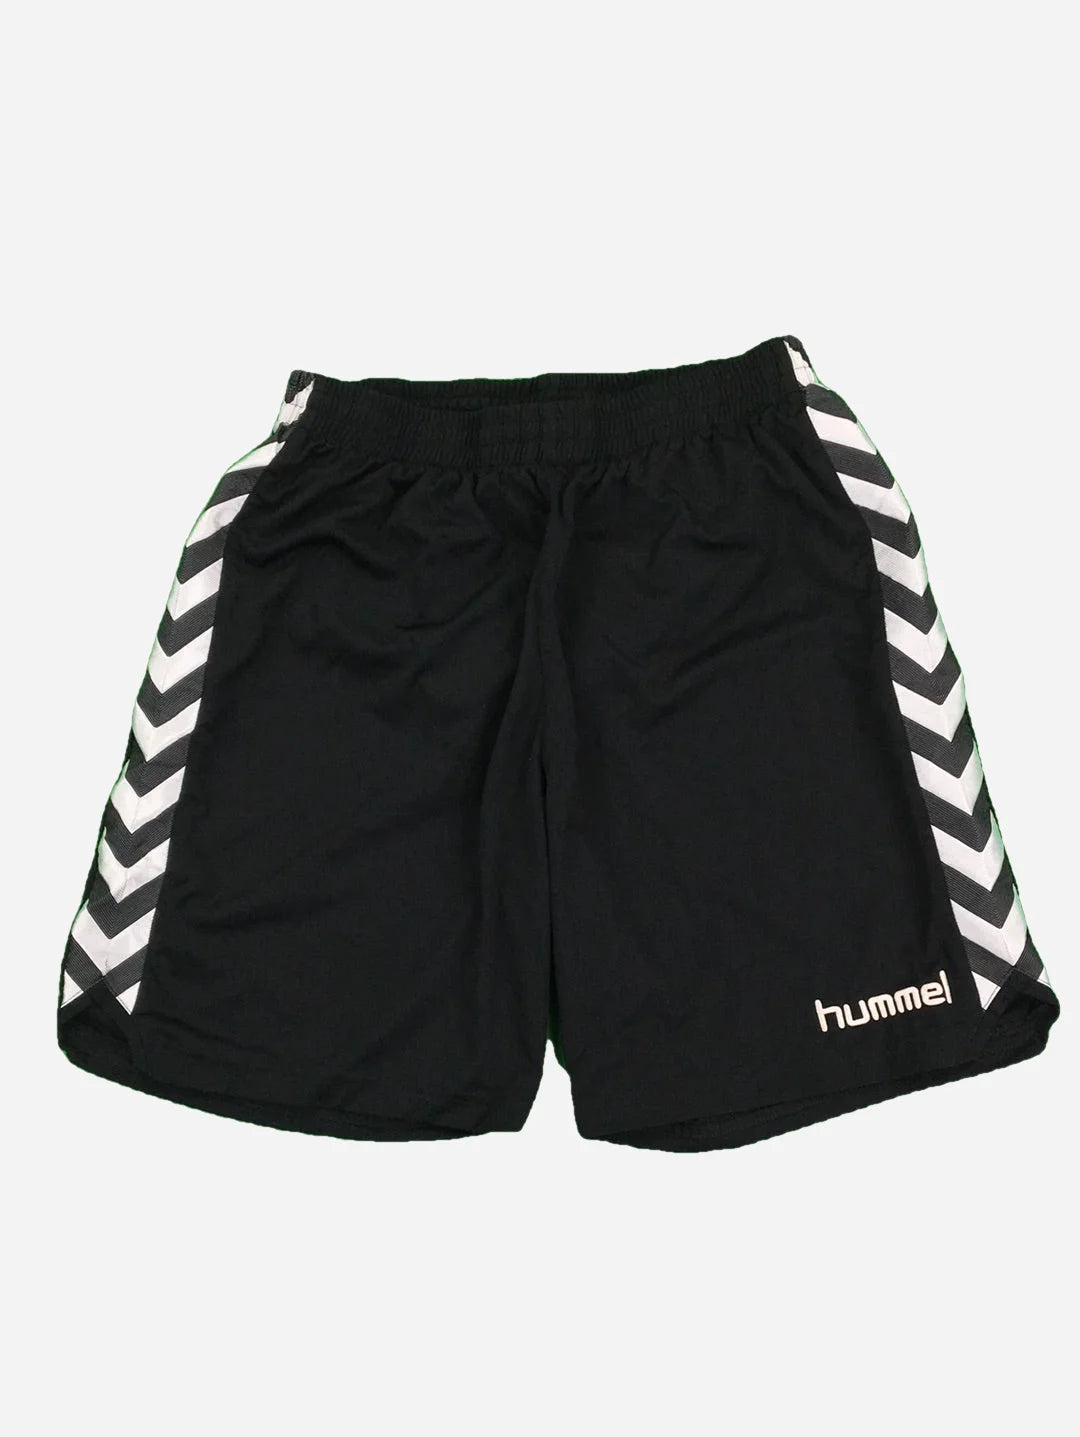 Hummel Sports Shorts (L)